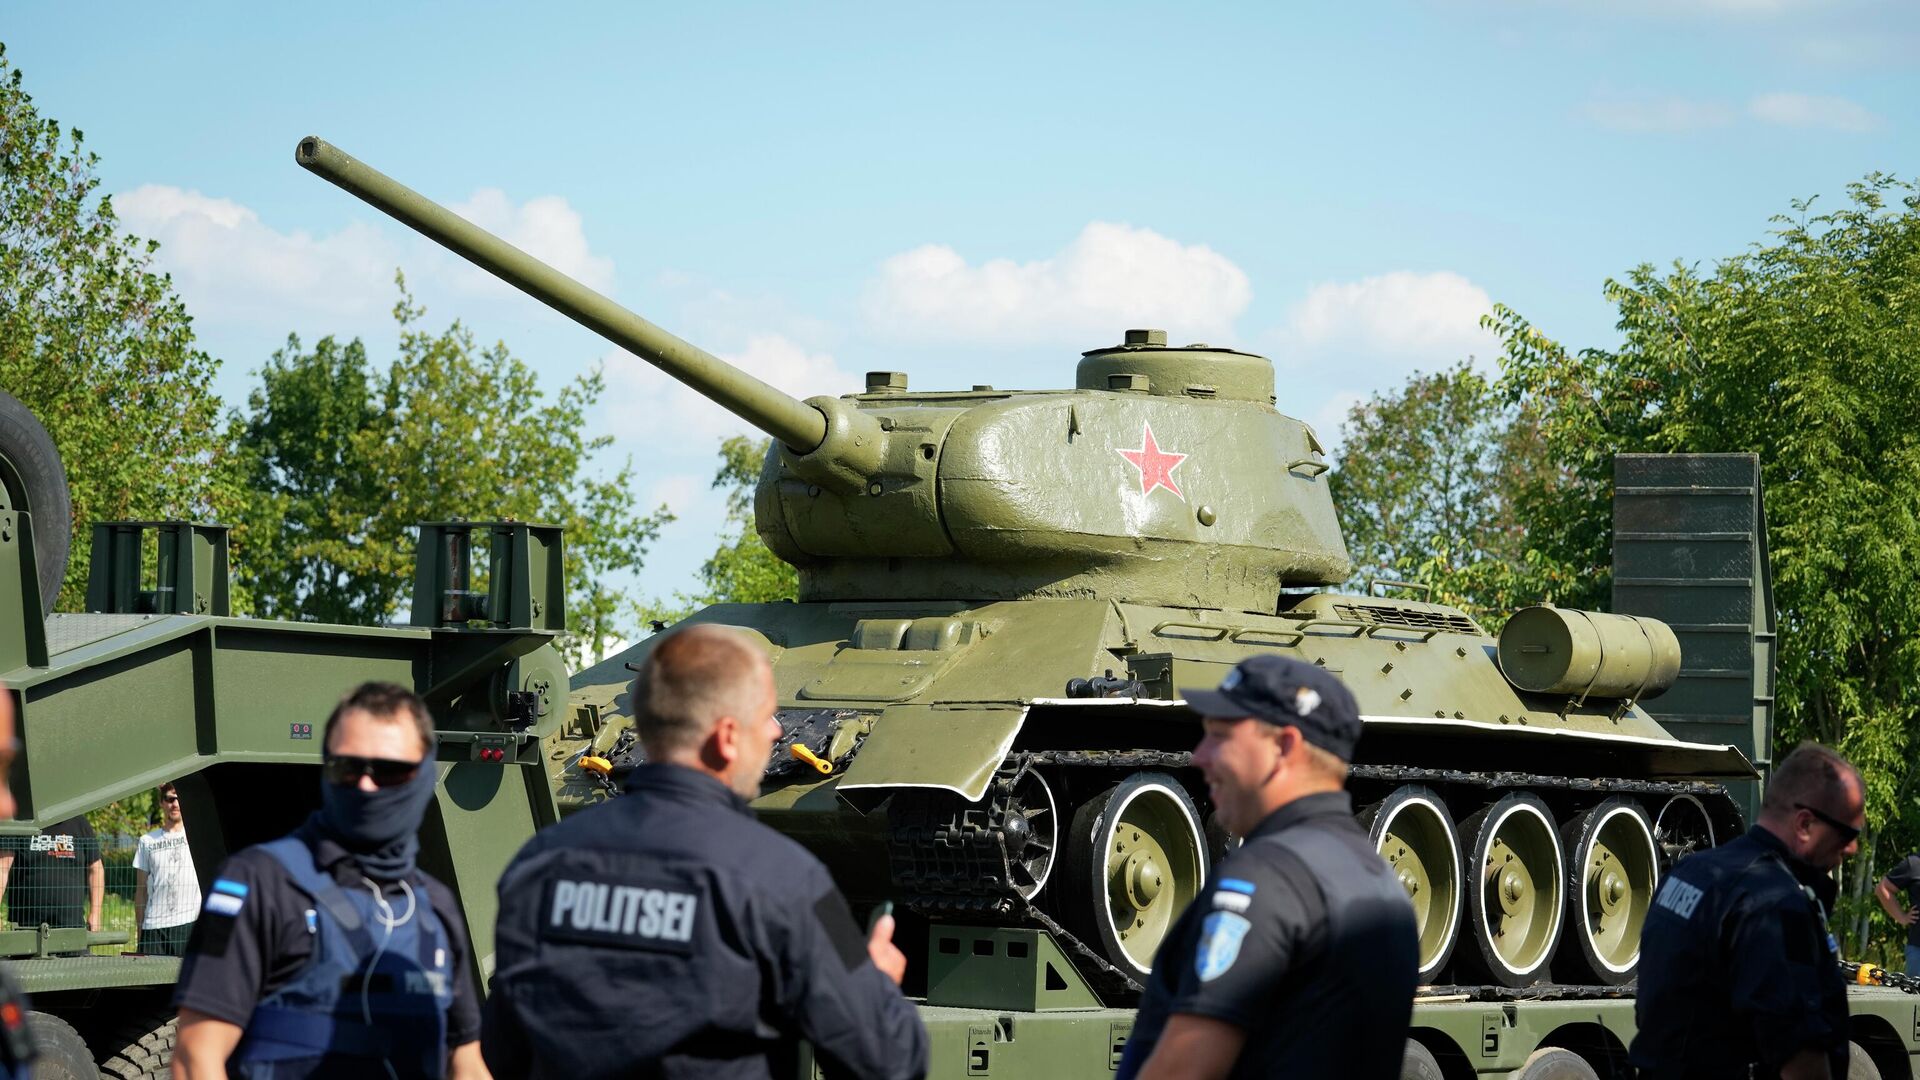 Демонтаж танка Т-34 в Нарве, Эстония. 16 августа 2022 года. - ИноСМИ, 1920, 07.09.2022